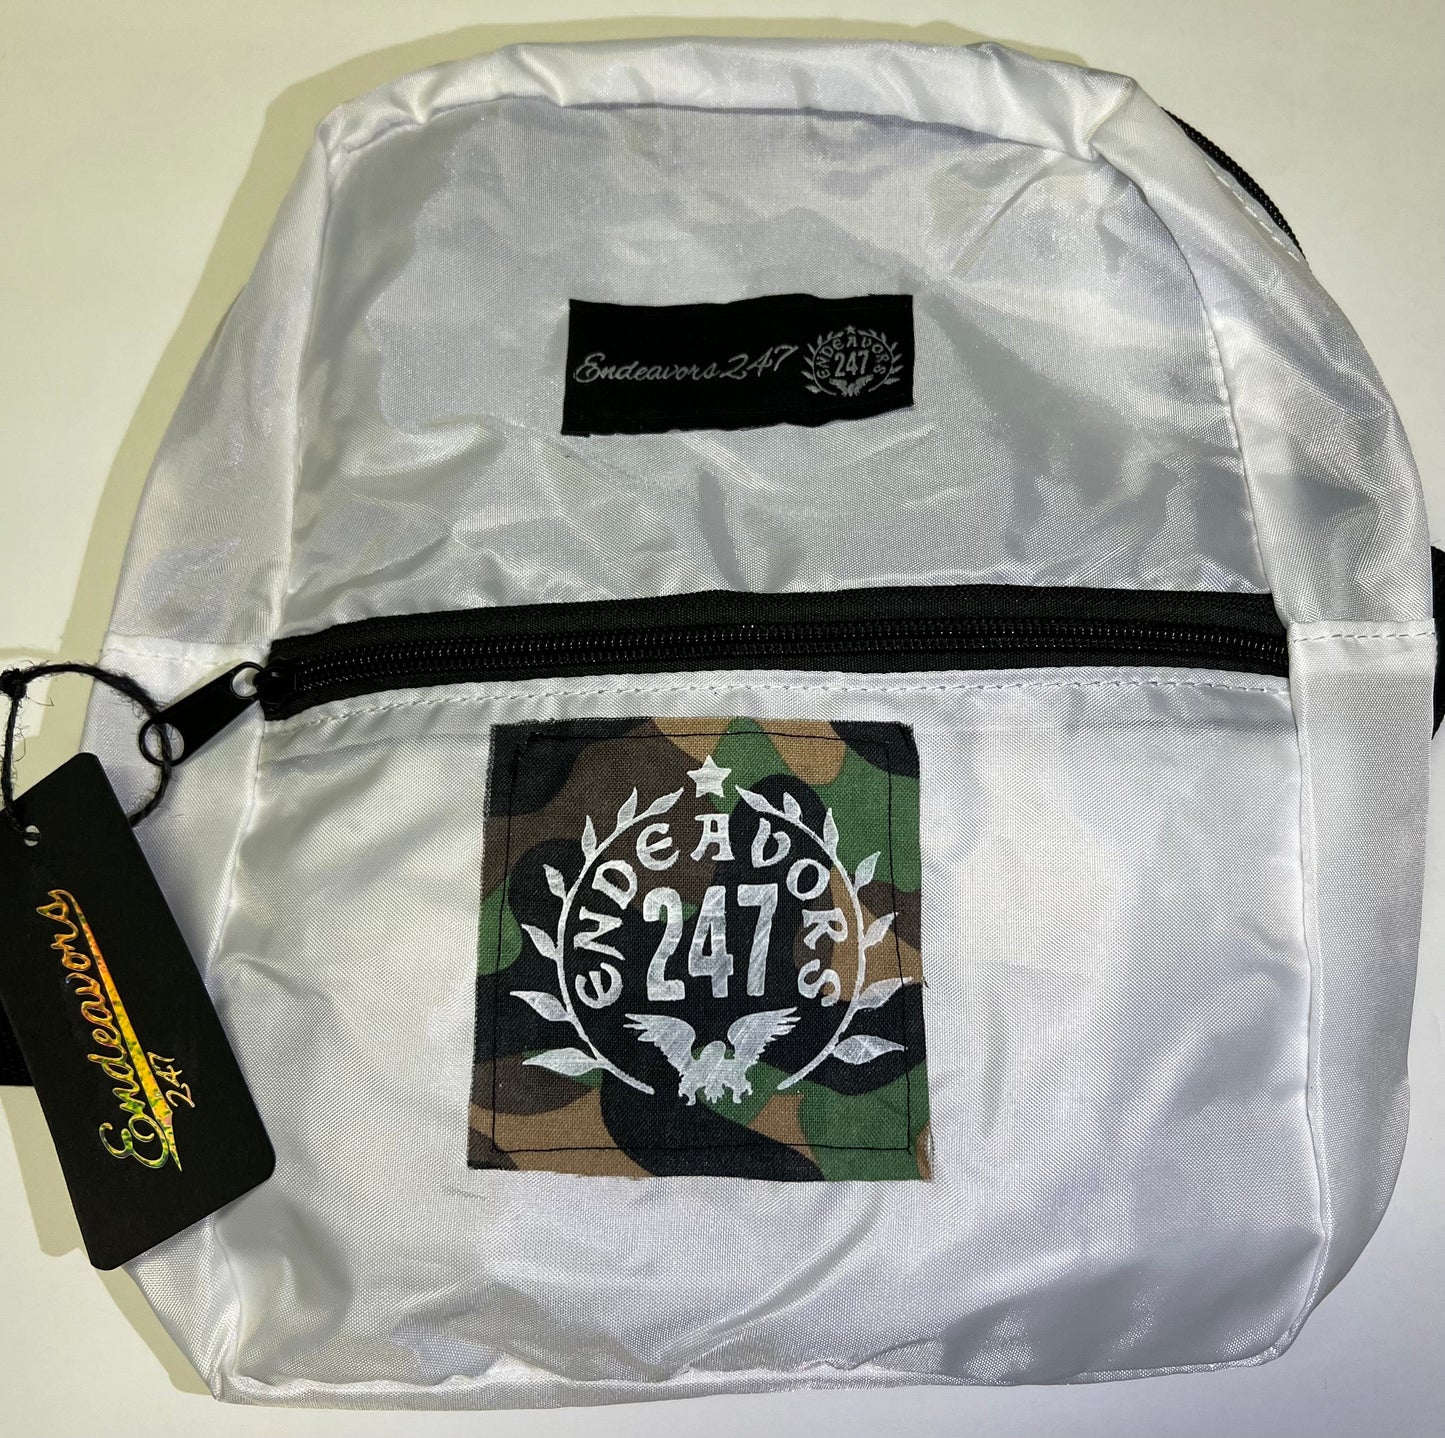 Endeavors247 Handmade Camo Patch - Mini Moto Hem Patch White Backpack